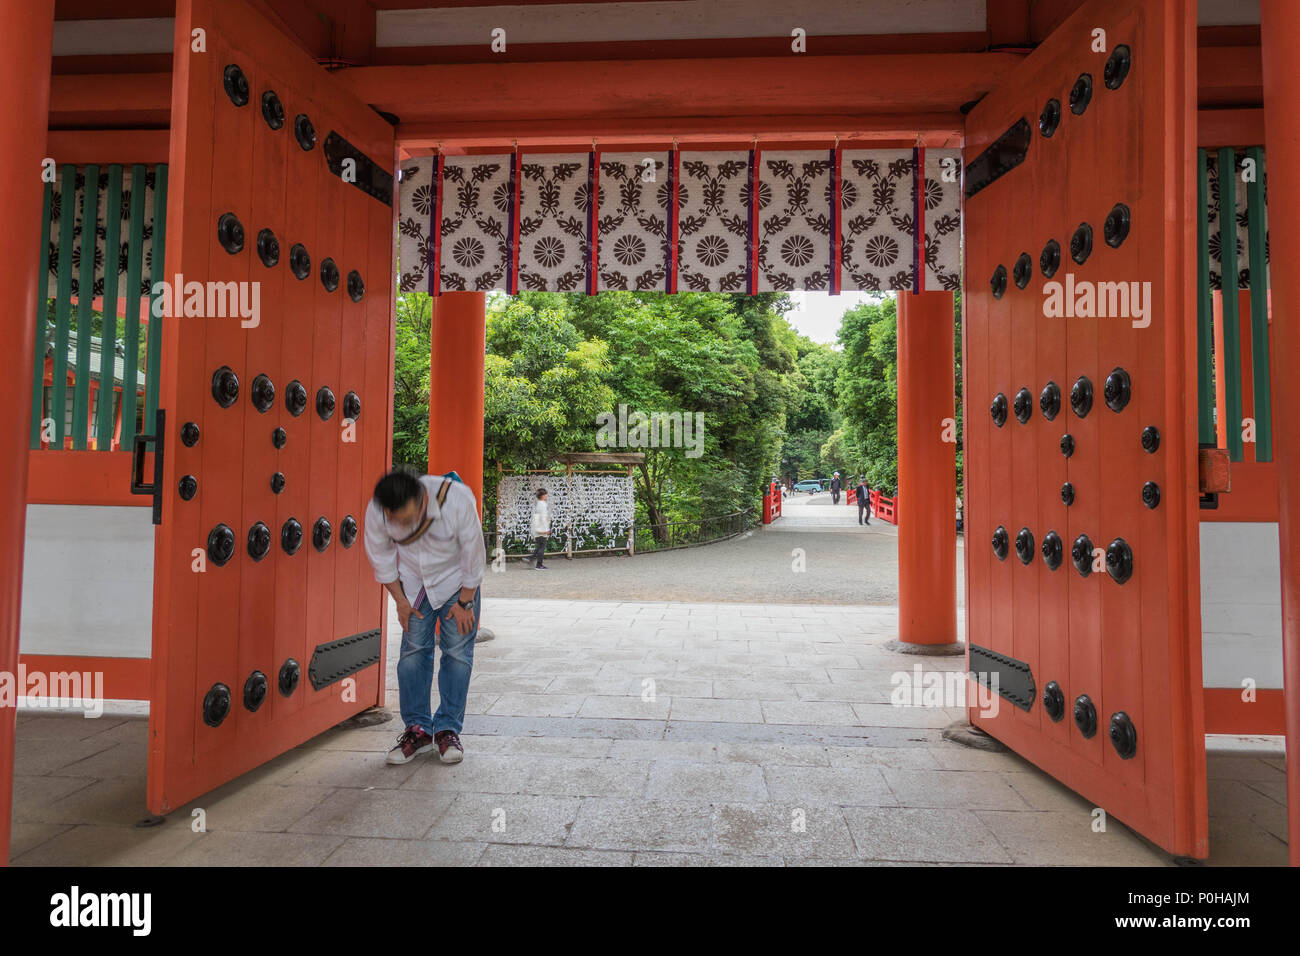 Man bowing  at shrine gate  before entering, Hikawa Jinja shrine, Omiya, Saitama, Japan Stock Photo